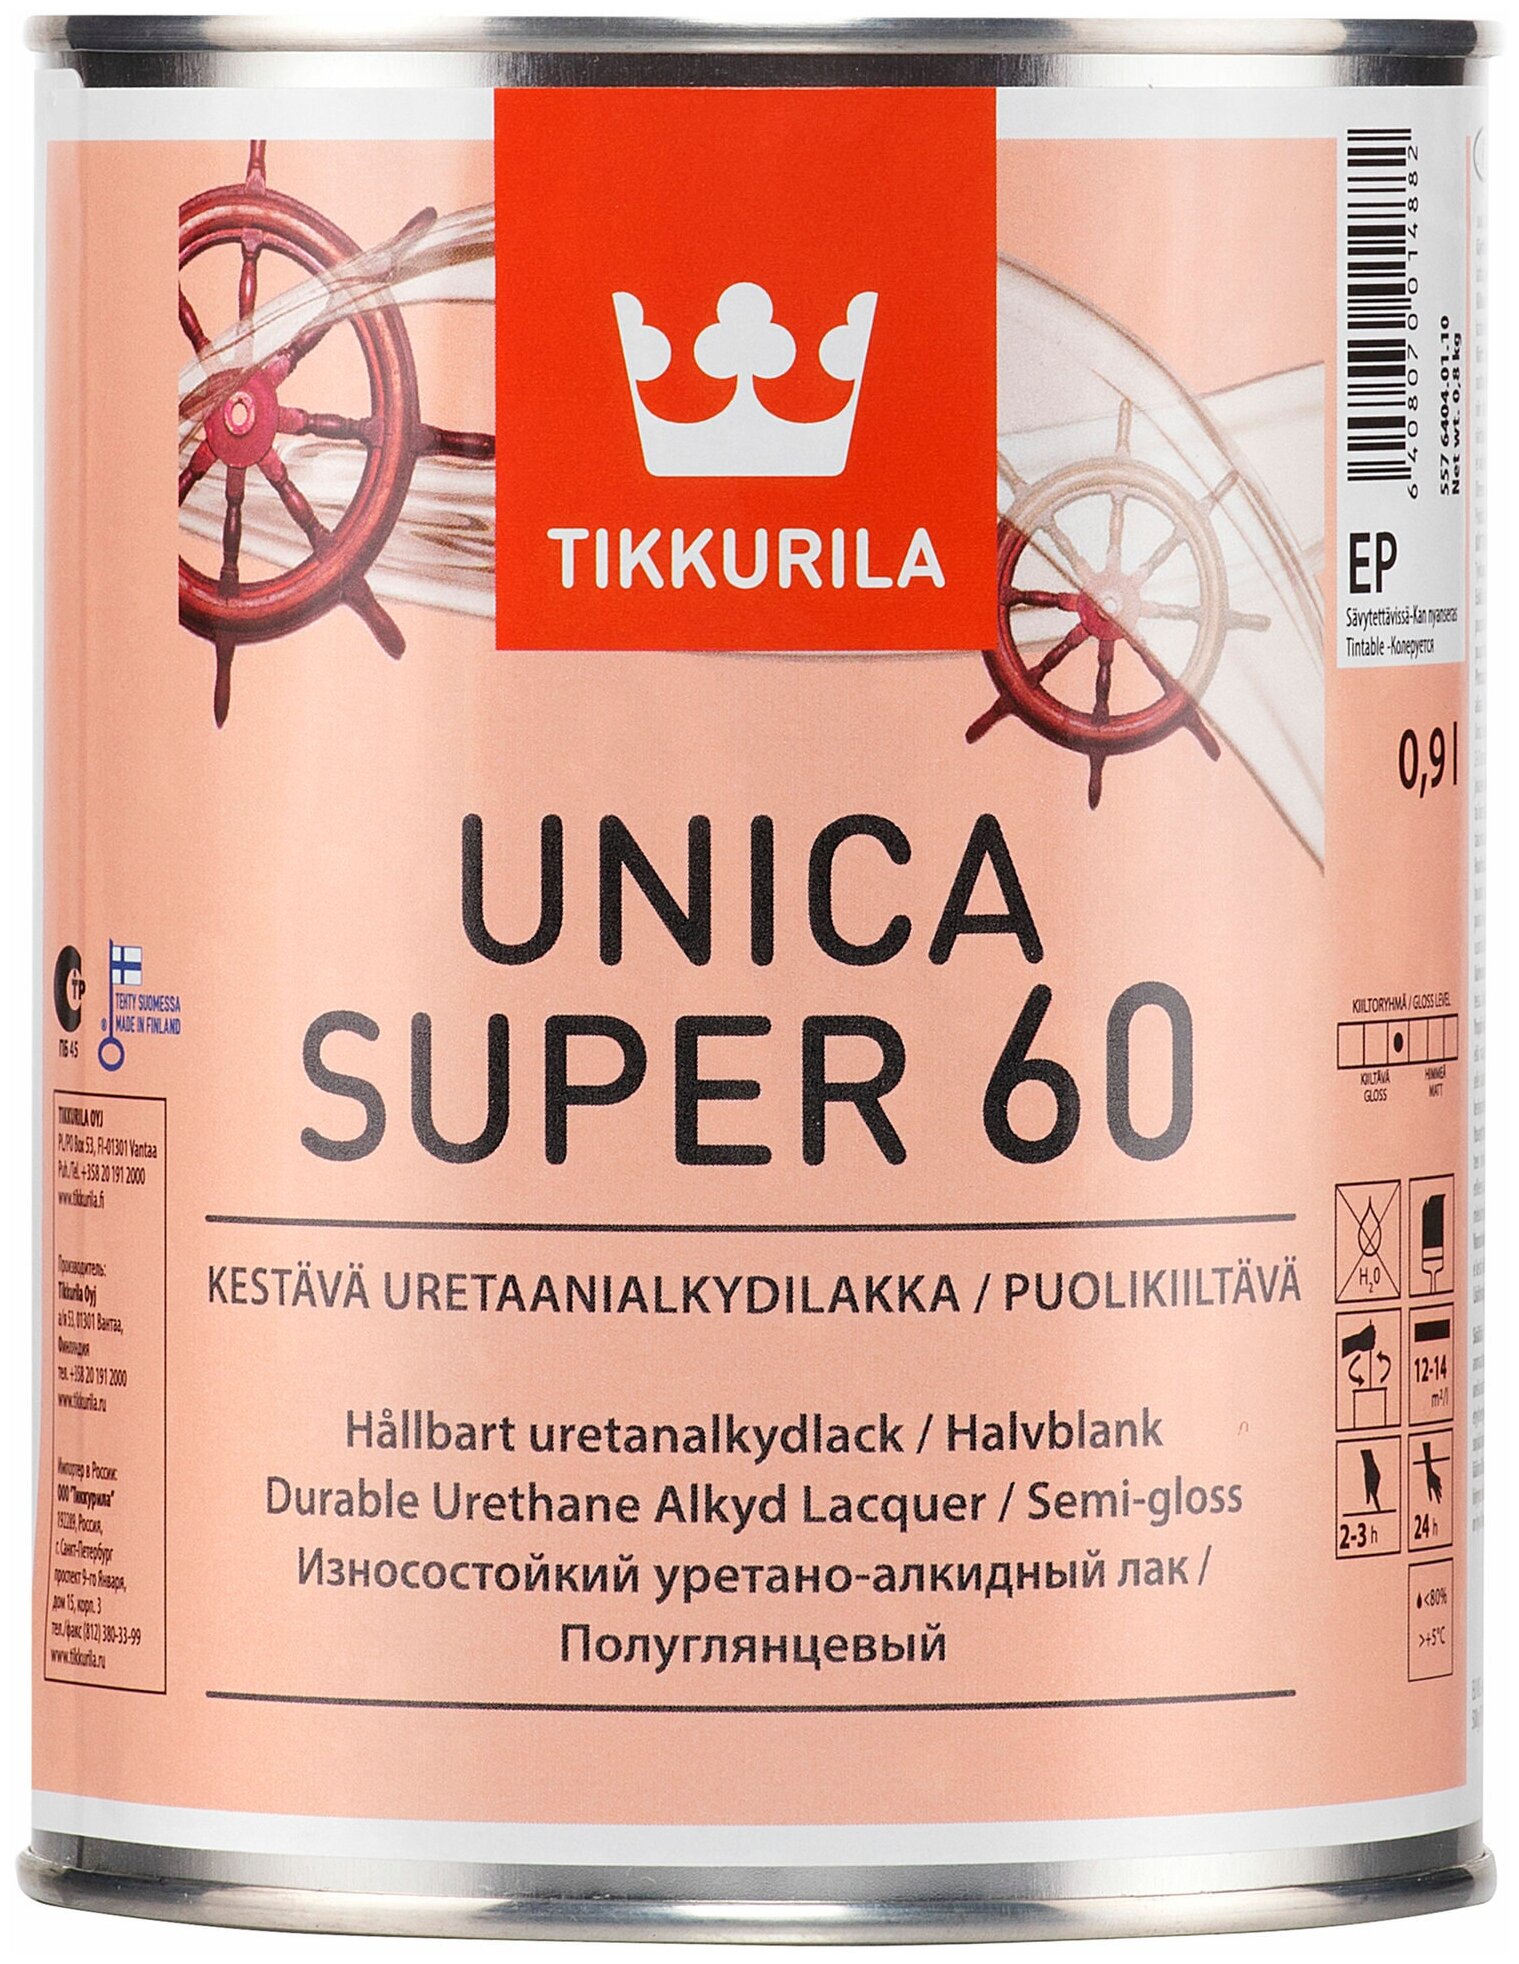   Tikkurila Unica Super 60  (0,9)